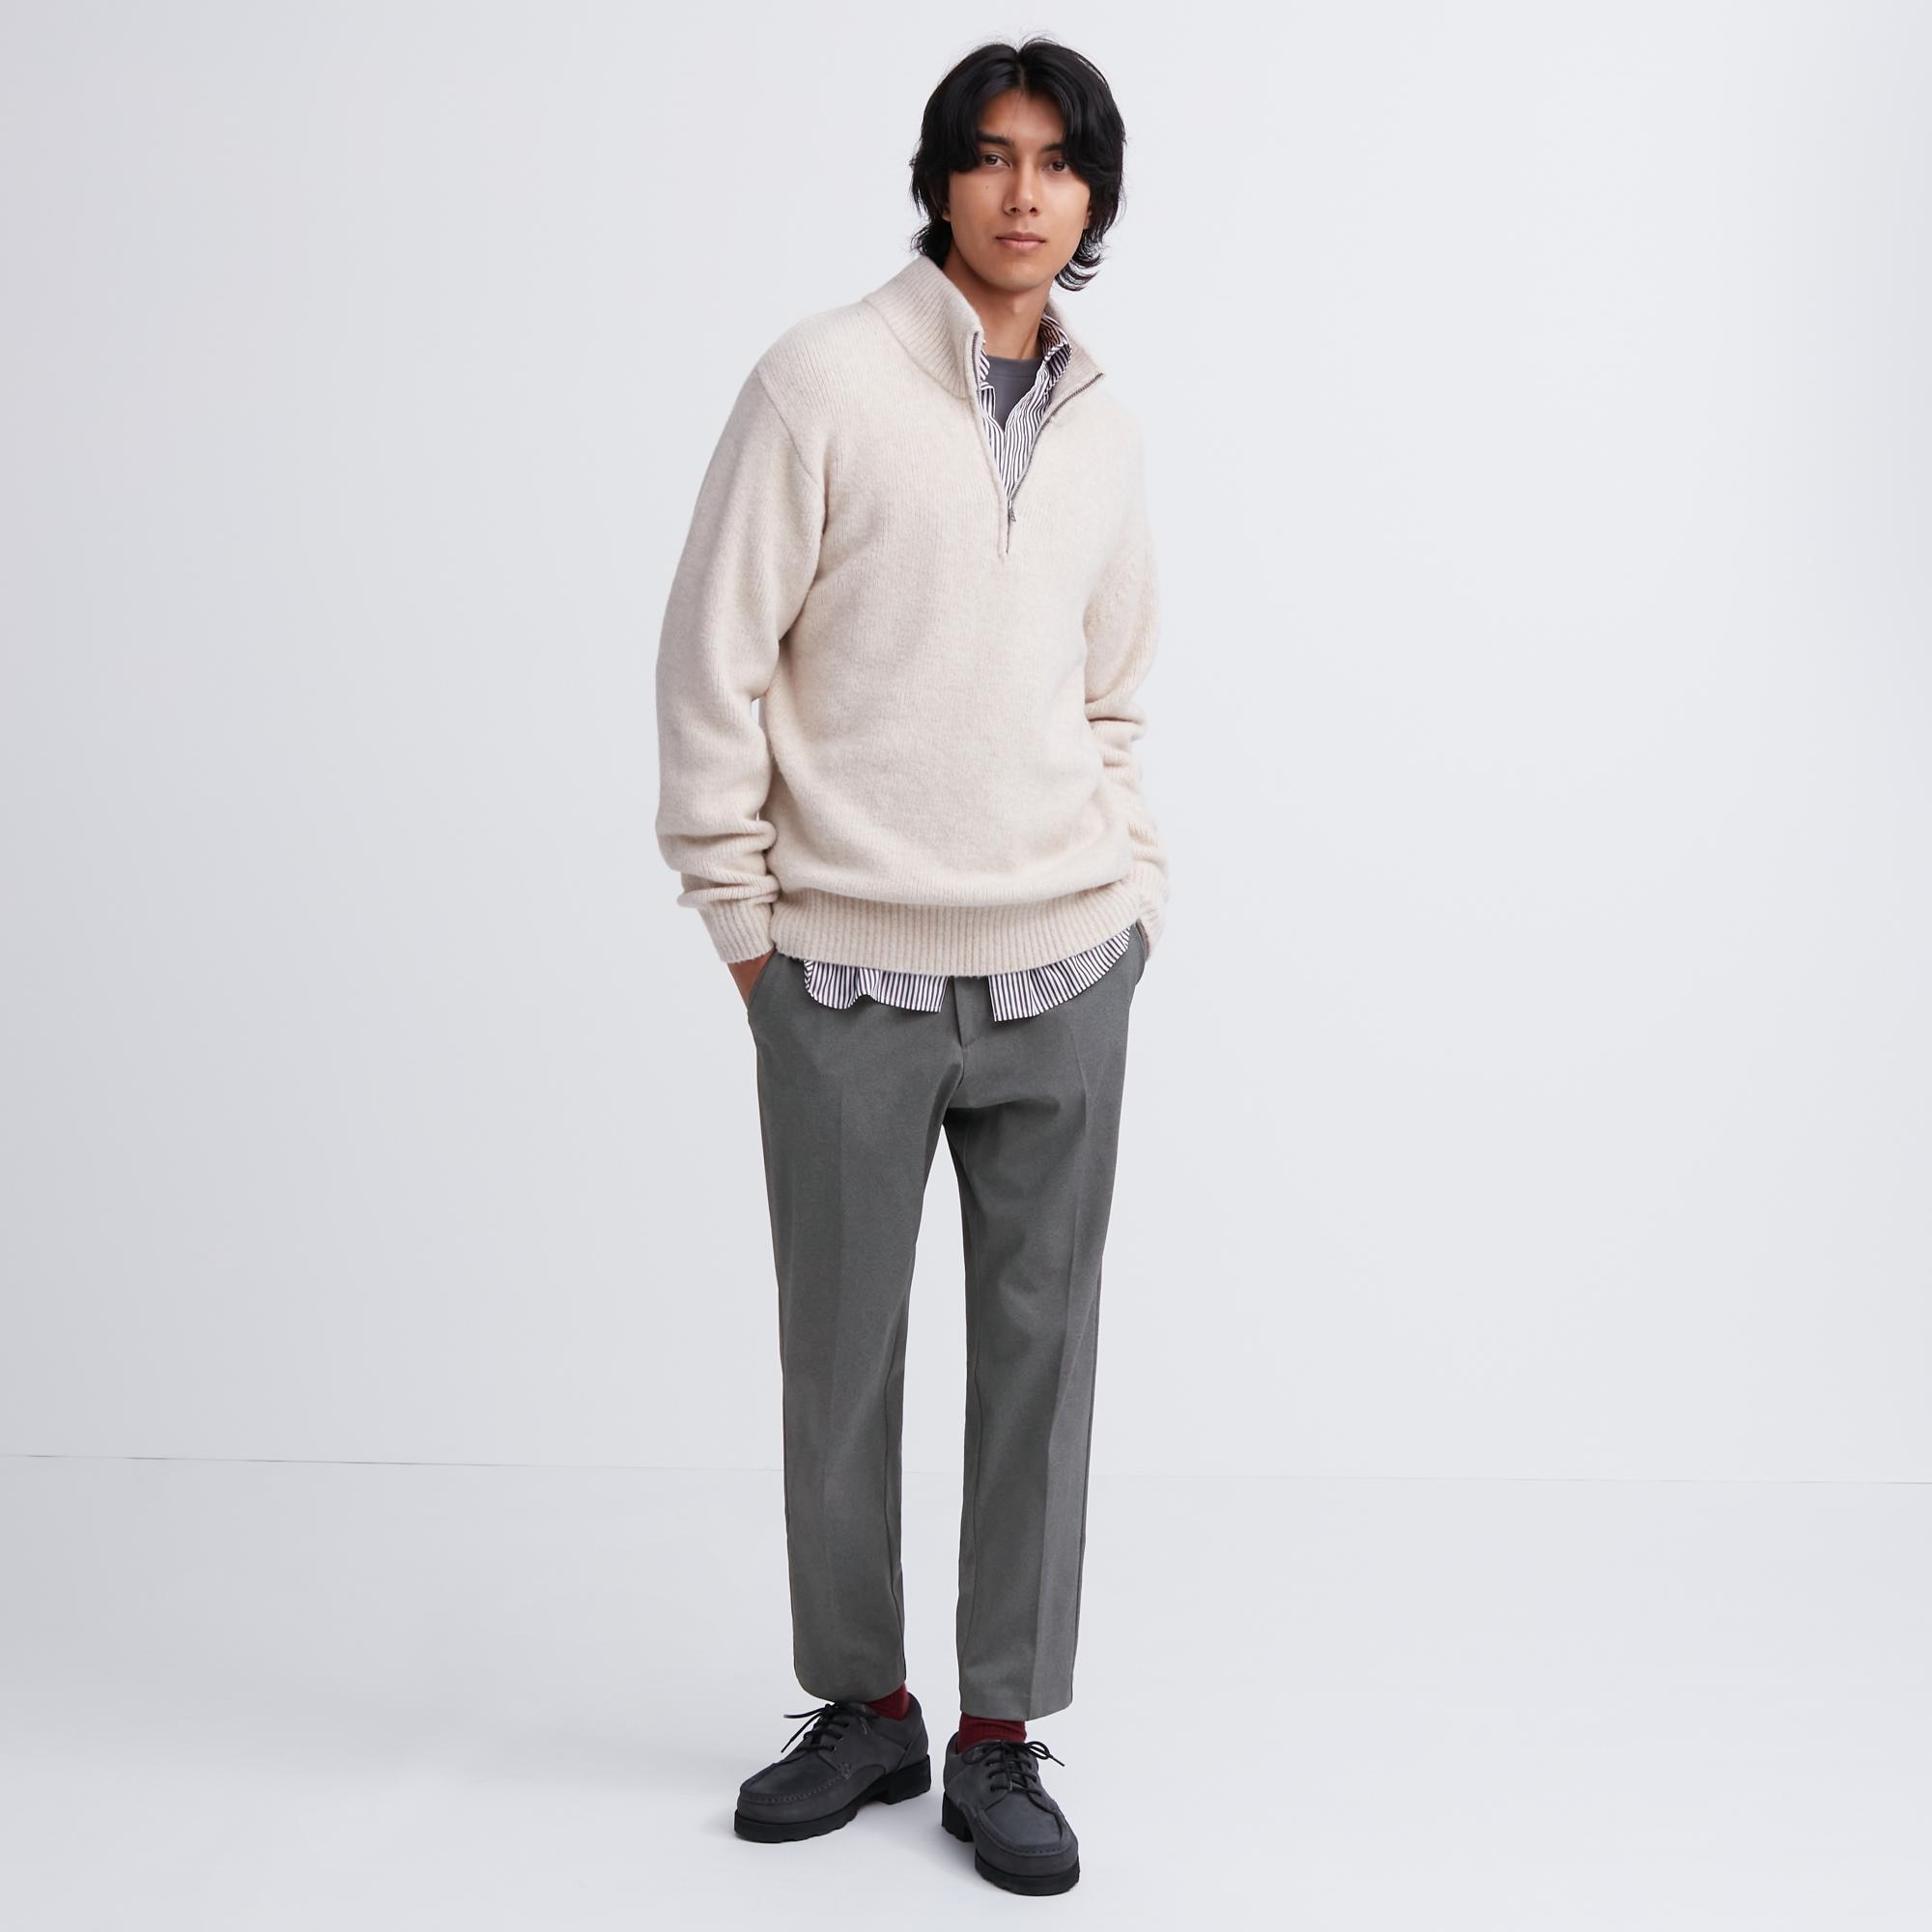 Uniqlo - Cotton Smart Ankle Length Trousers - Beige - M, £34.90